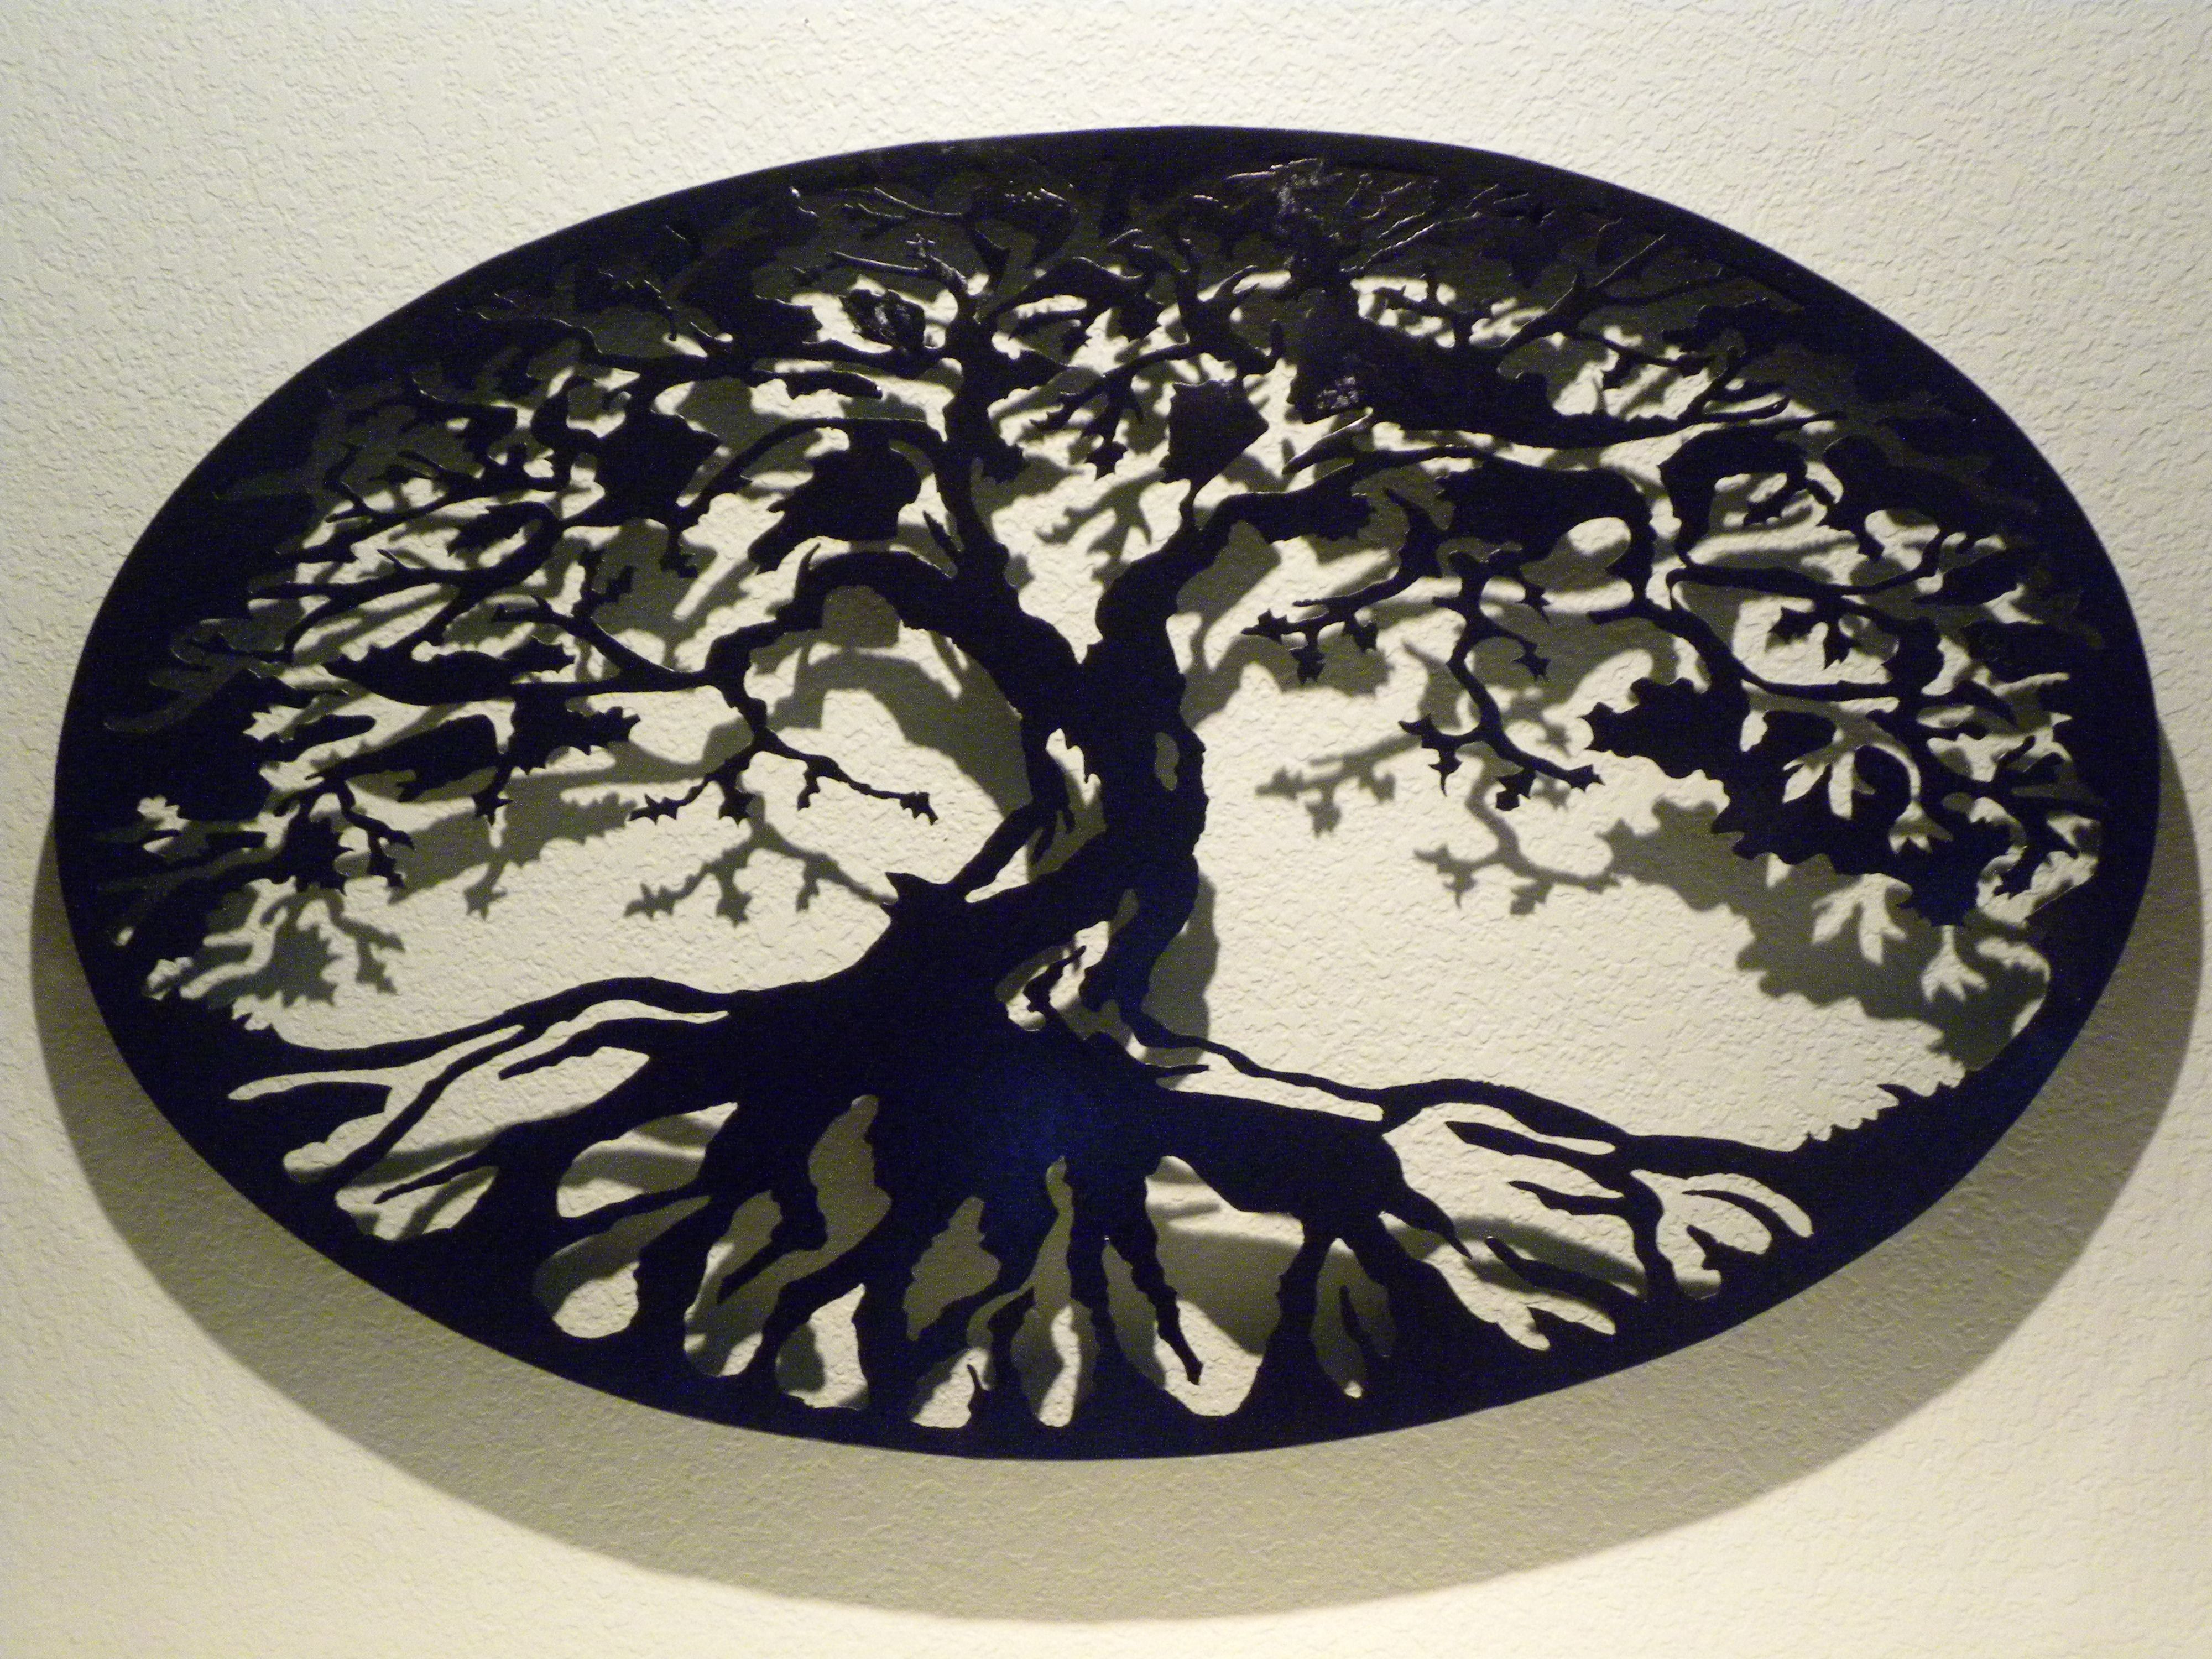 Buy A Custom Oval Tree Of Life Metal Wall Art, Made To Order From Inside Tree Of Life Metal Wall Art (Photo 1 of 20)